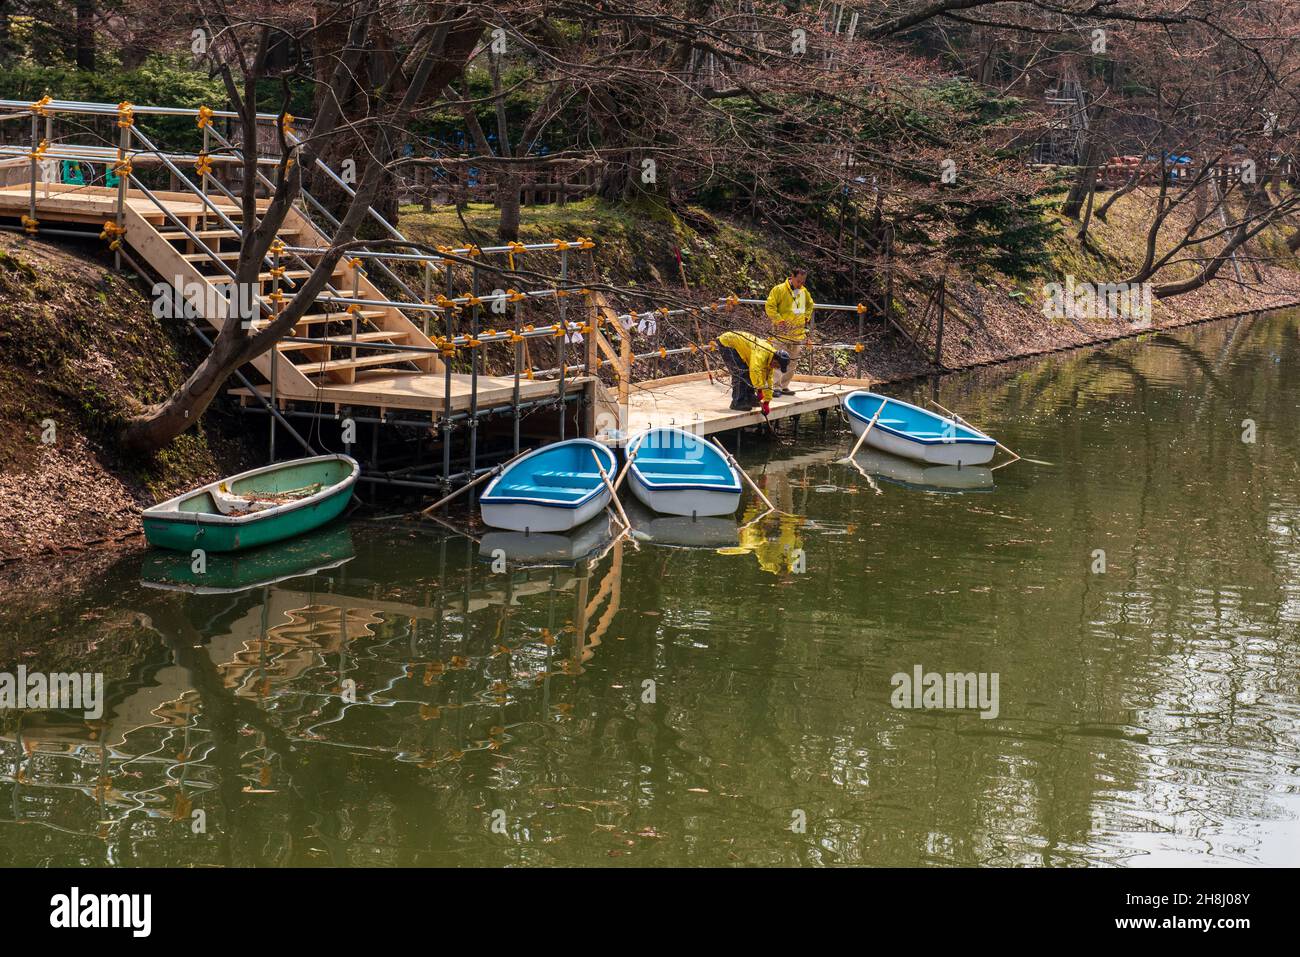 Aomori, Japan  Workers in yelloe jackets secure rowboats at a dock. Stock Photo